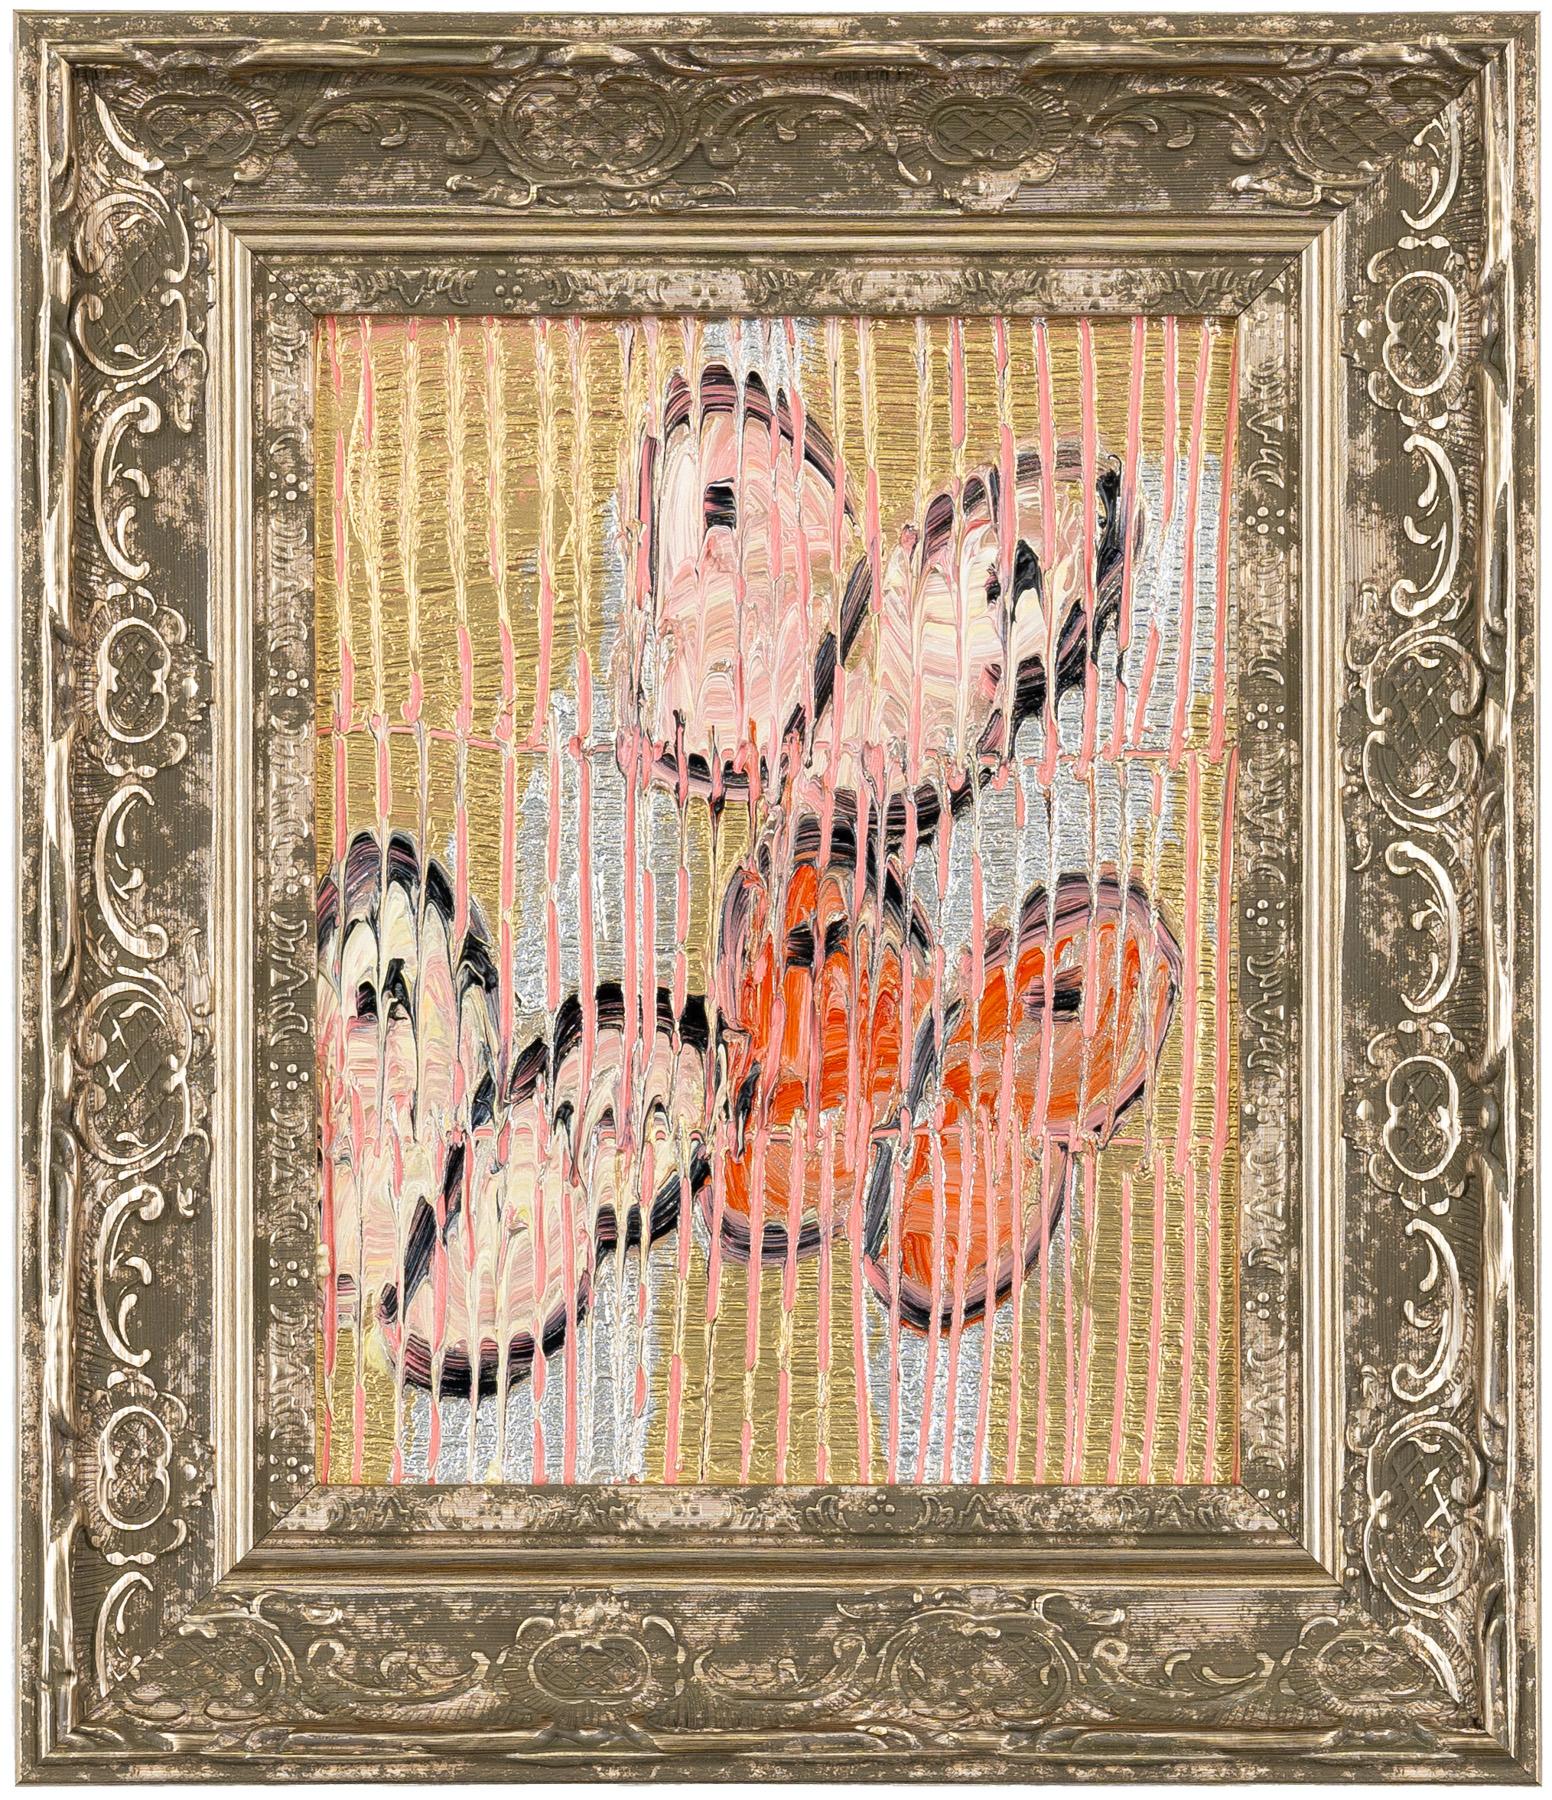 Hunt Slonem "Pink View" Butterflies on Metallic
Pink and orange butterflies on a metallic gold and silver etched background in a vintage frame.

Unframed: 10 x 8 inches
Framed: 14.5 x 12.5 inches
*Painting is framed - Please note Hunt Slonem